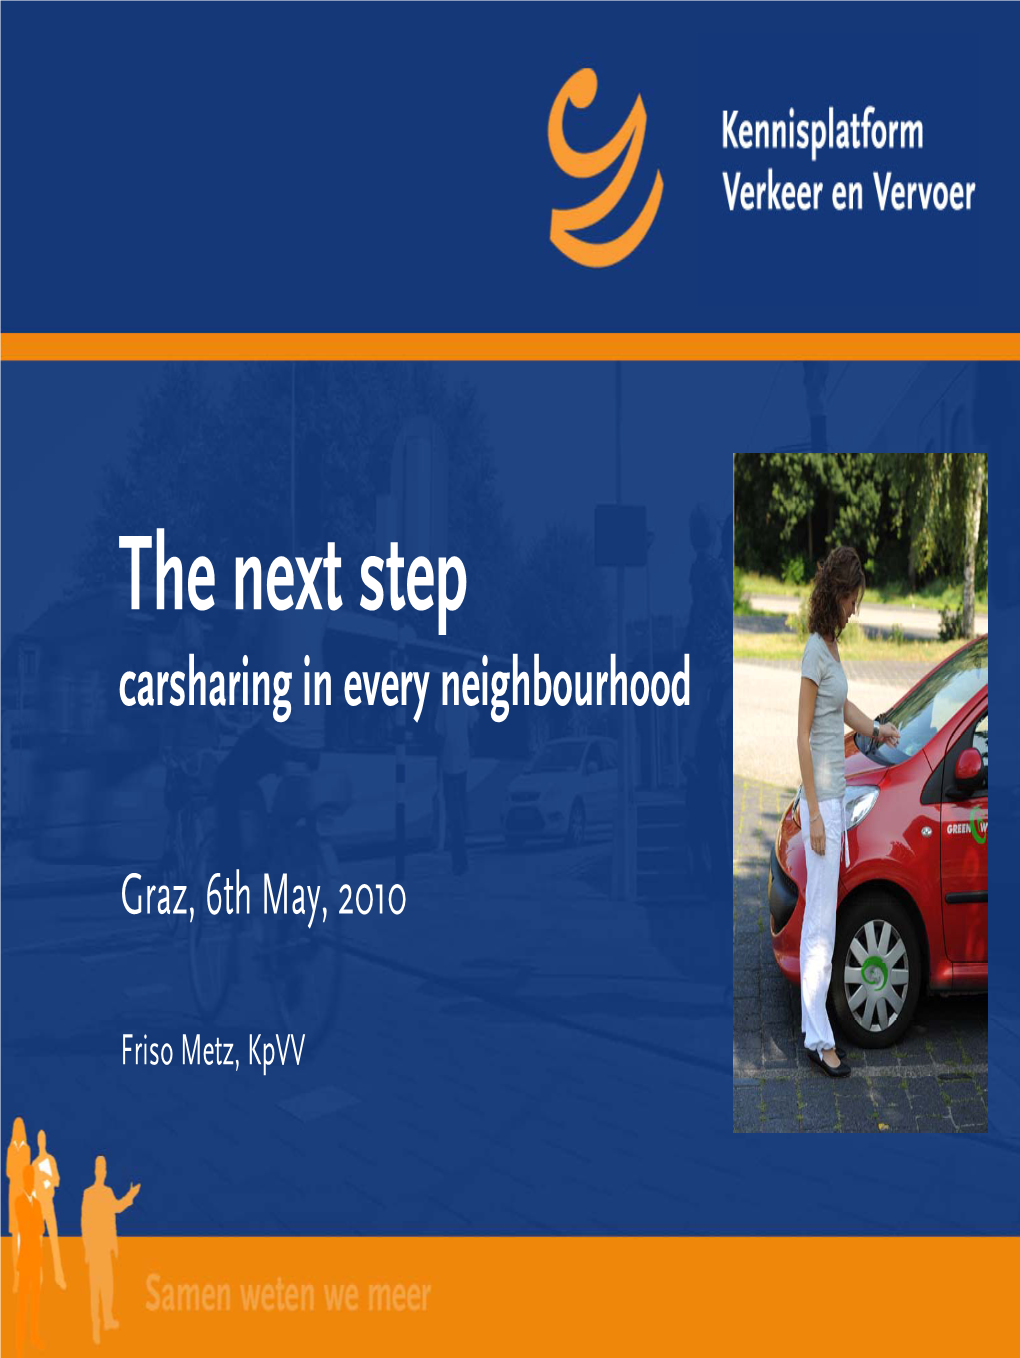 Carsharing in Every Neighbourhood